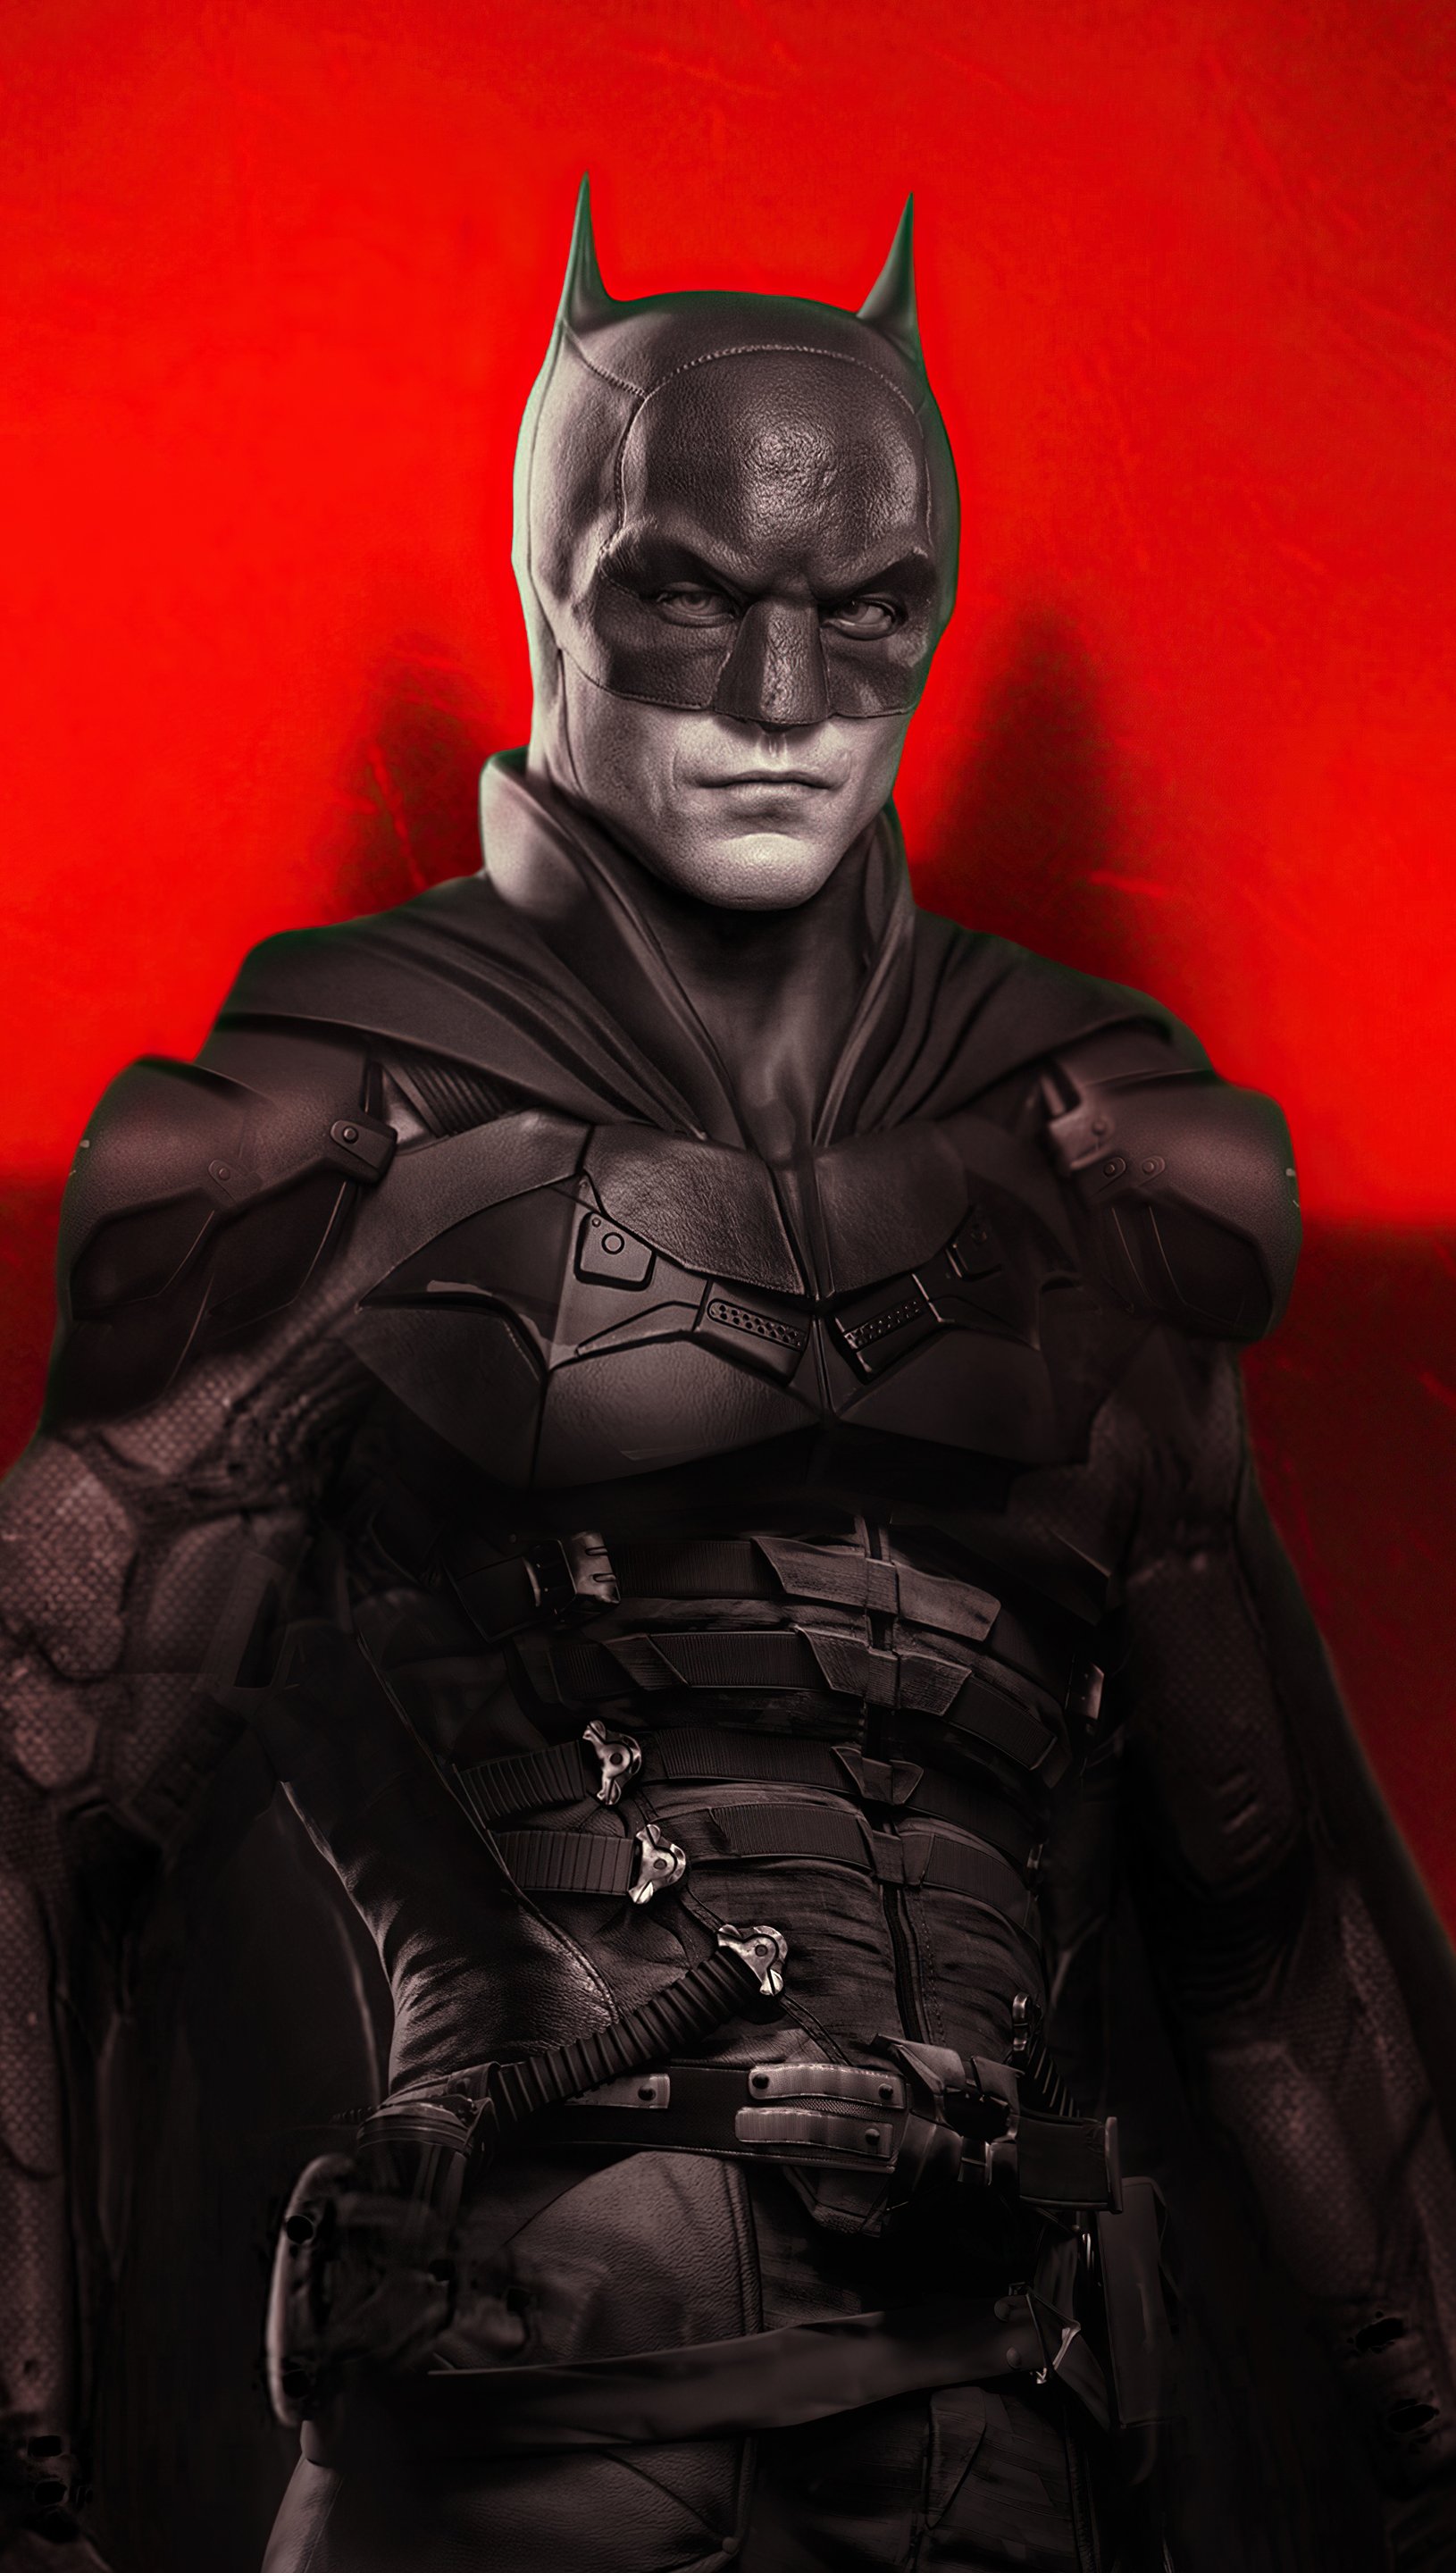 The Batman Poster 2022 Wallpapers 5k Ultra HD ID:9201